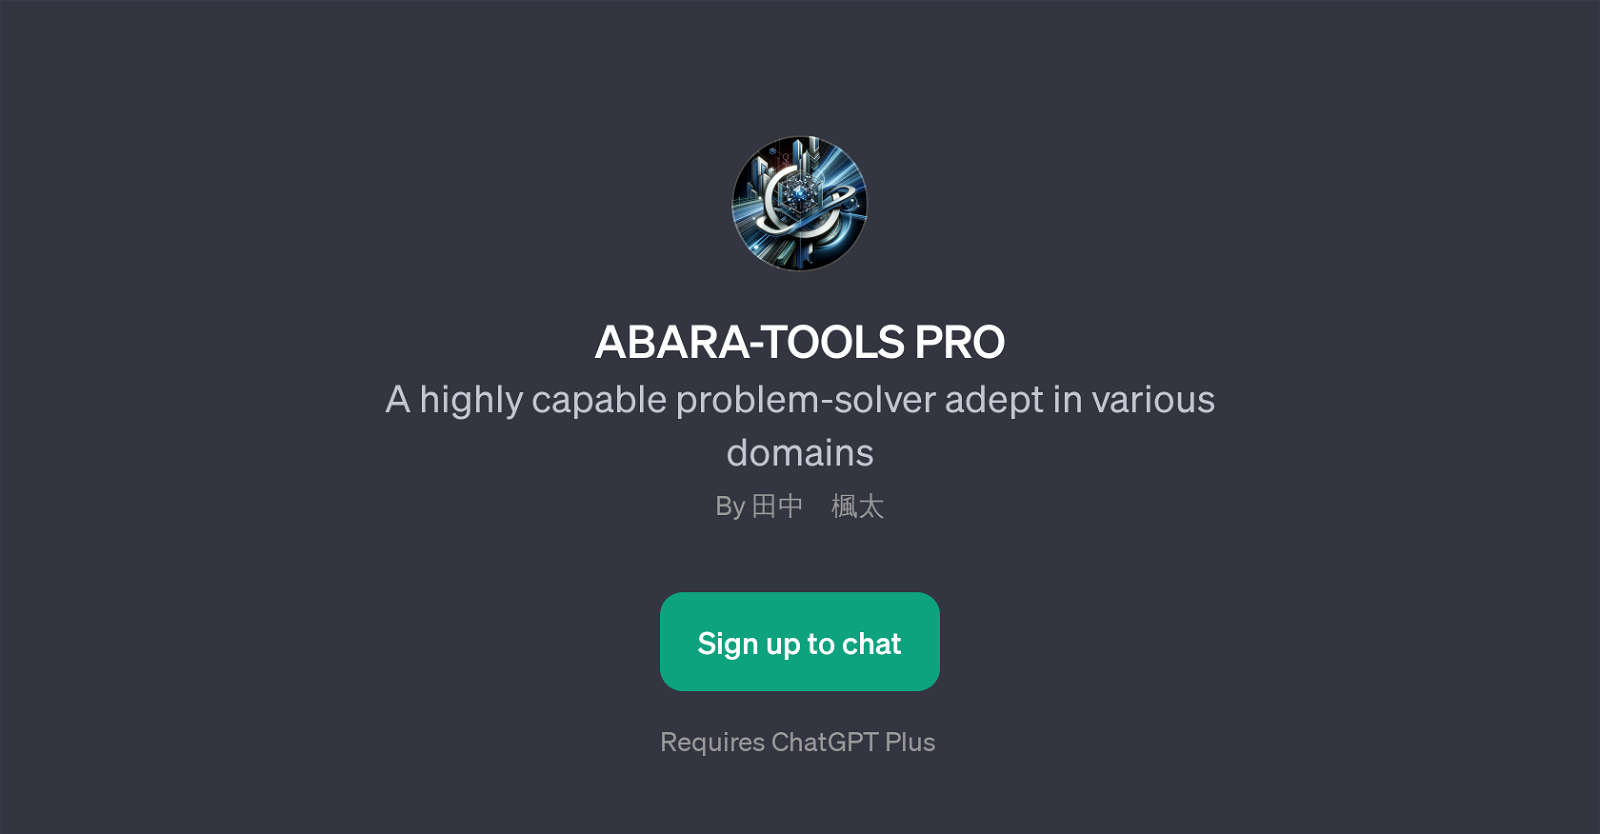 ABARA-TOOLS PRO website